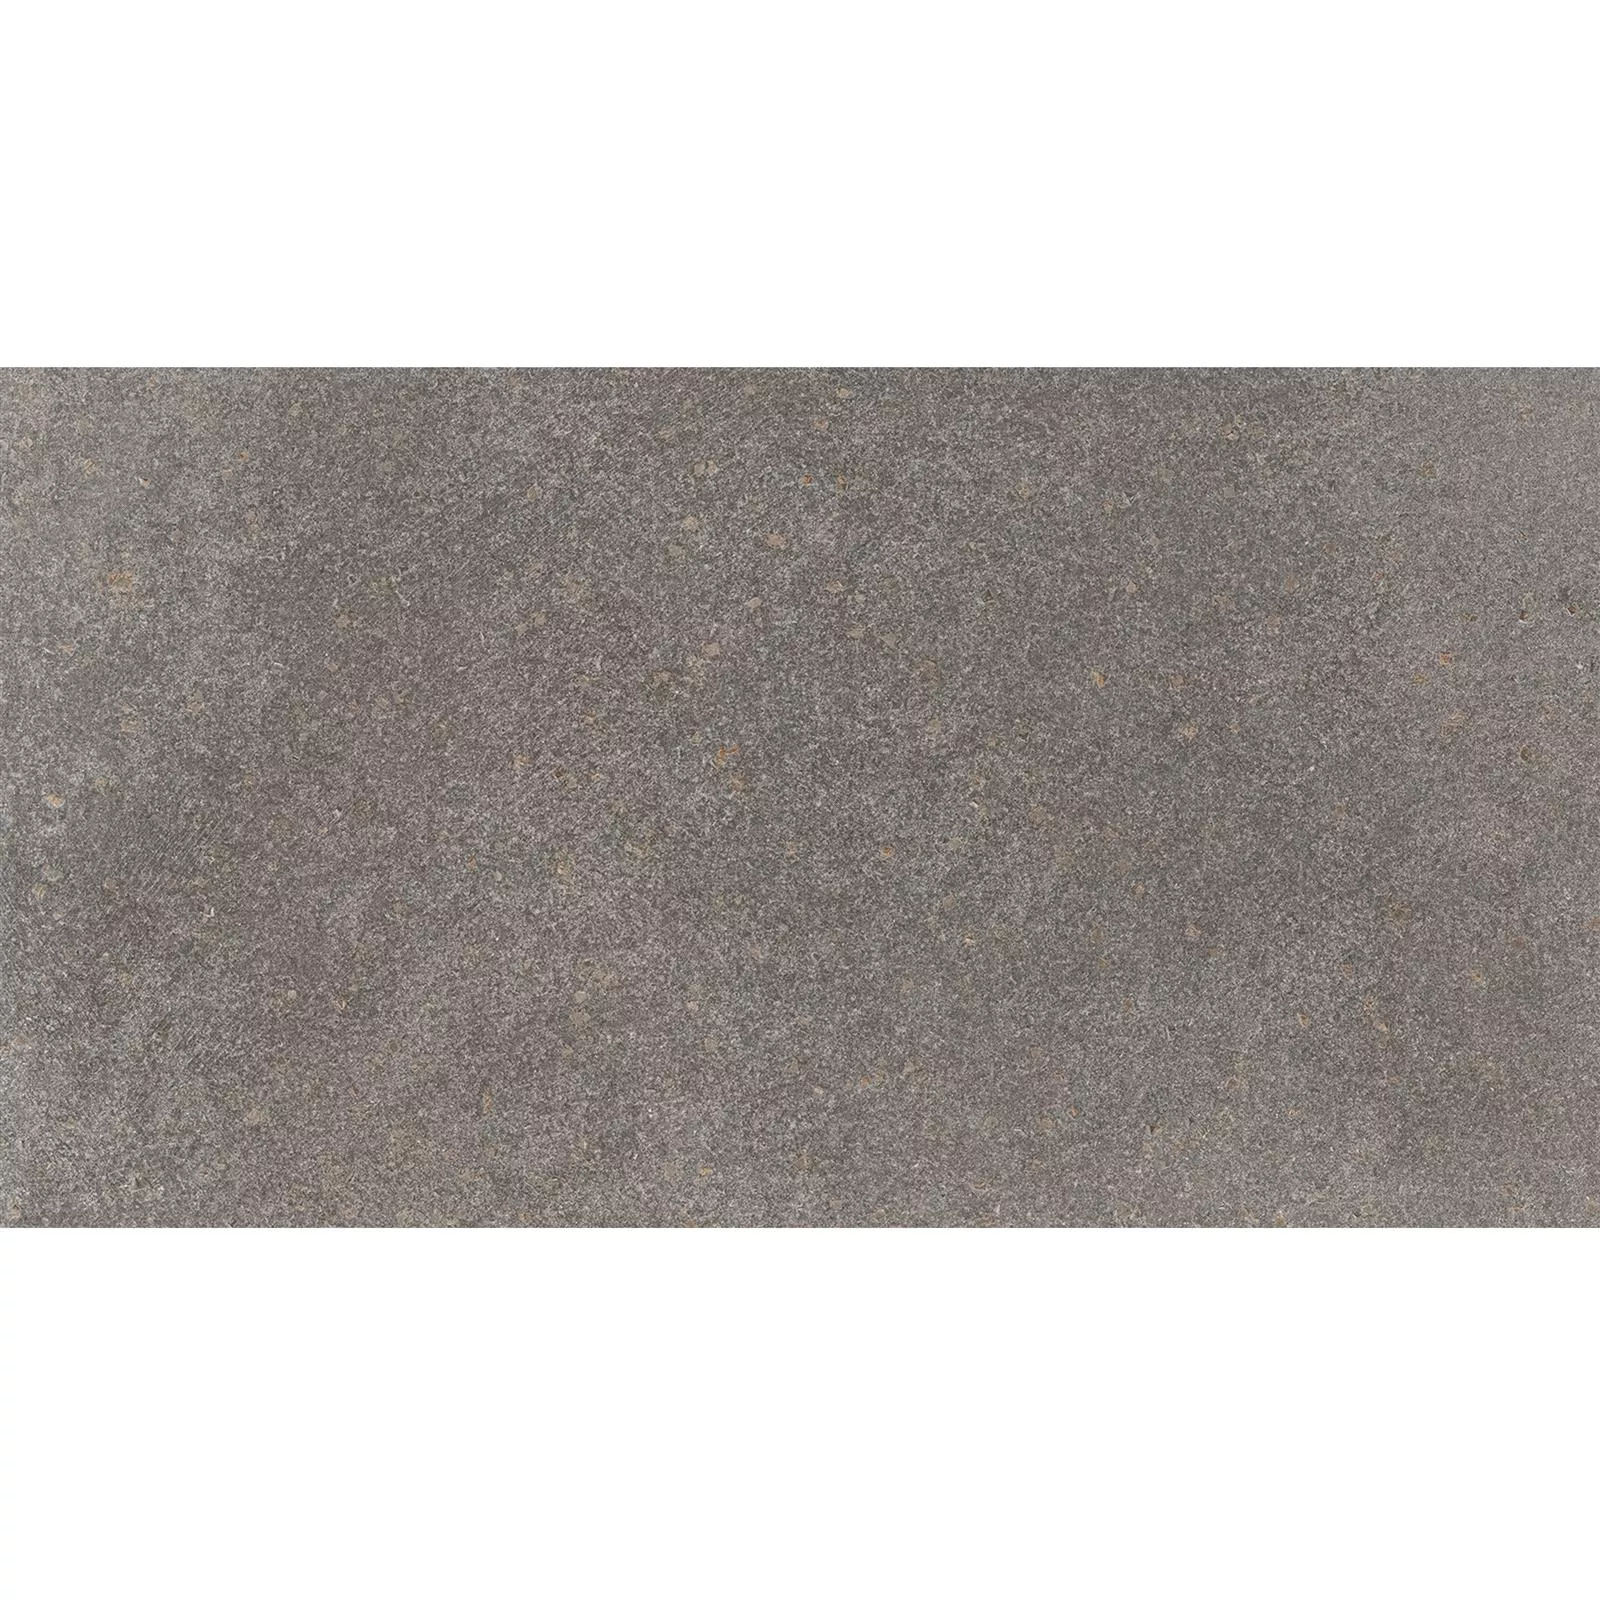 Sample Floor Tiles Stone Optic Horizon Brown 30x60cm